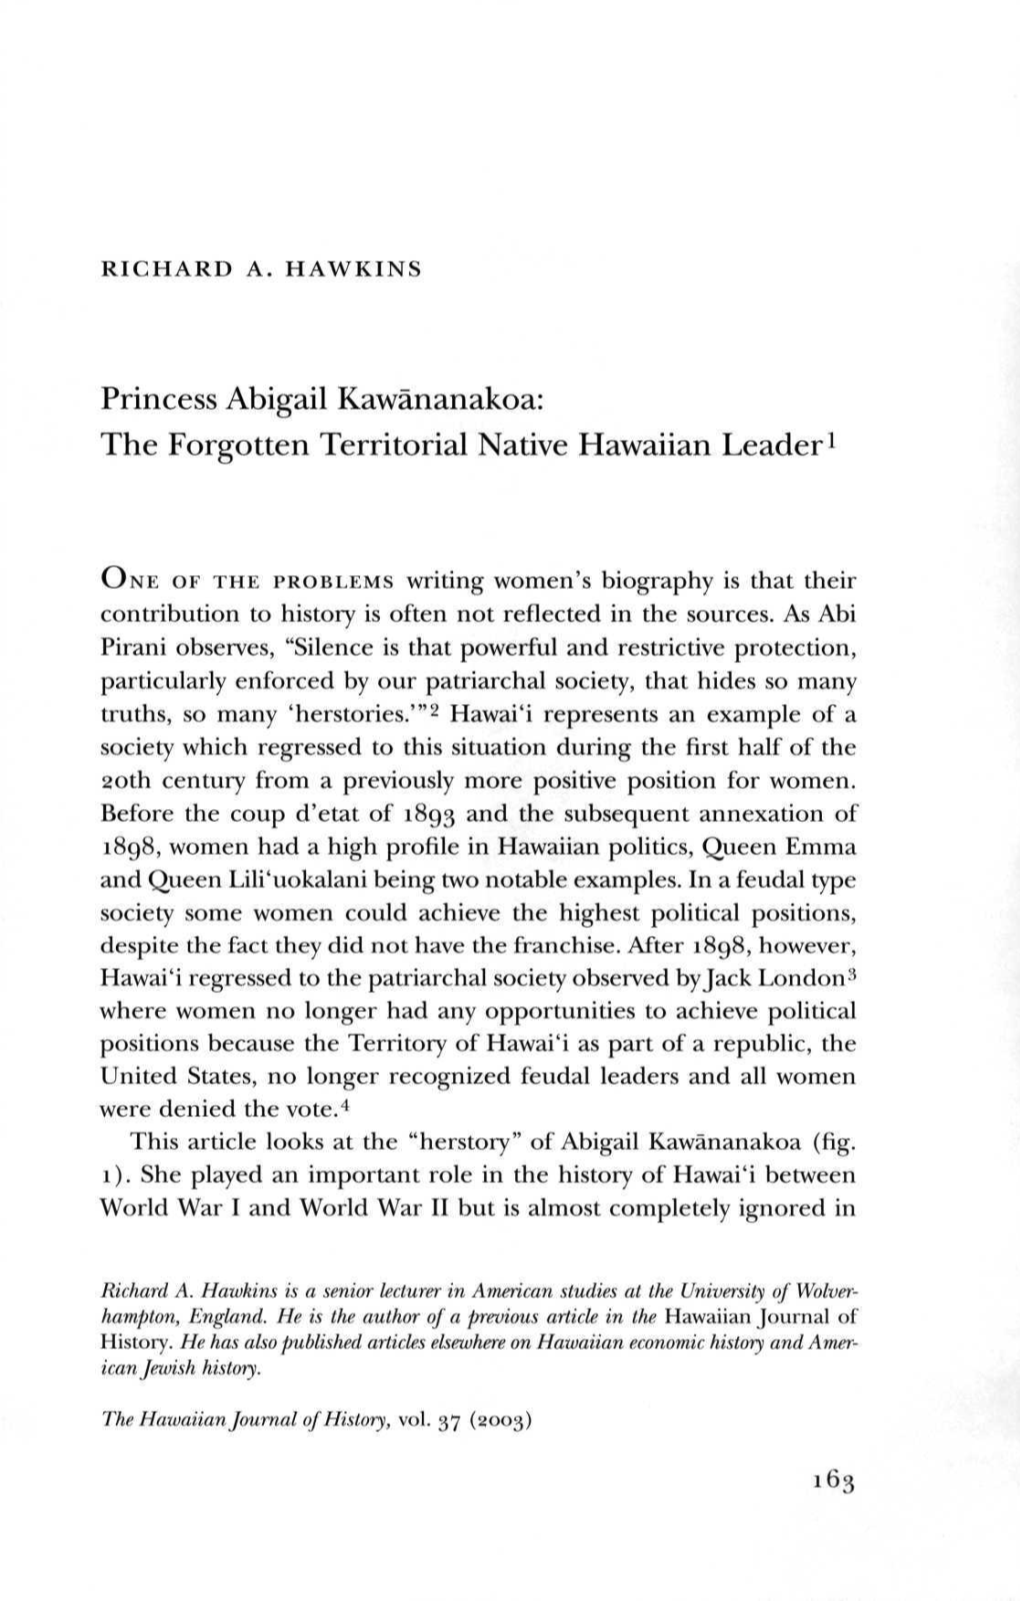 Princess Abigail Kawananakoa: the Forgotten Territorial Native Hawaiian Leader1